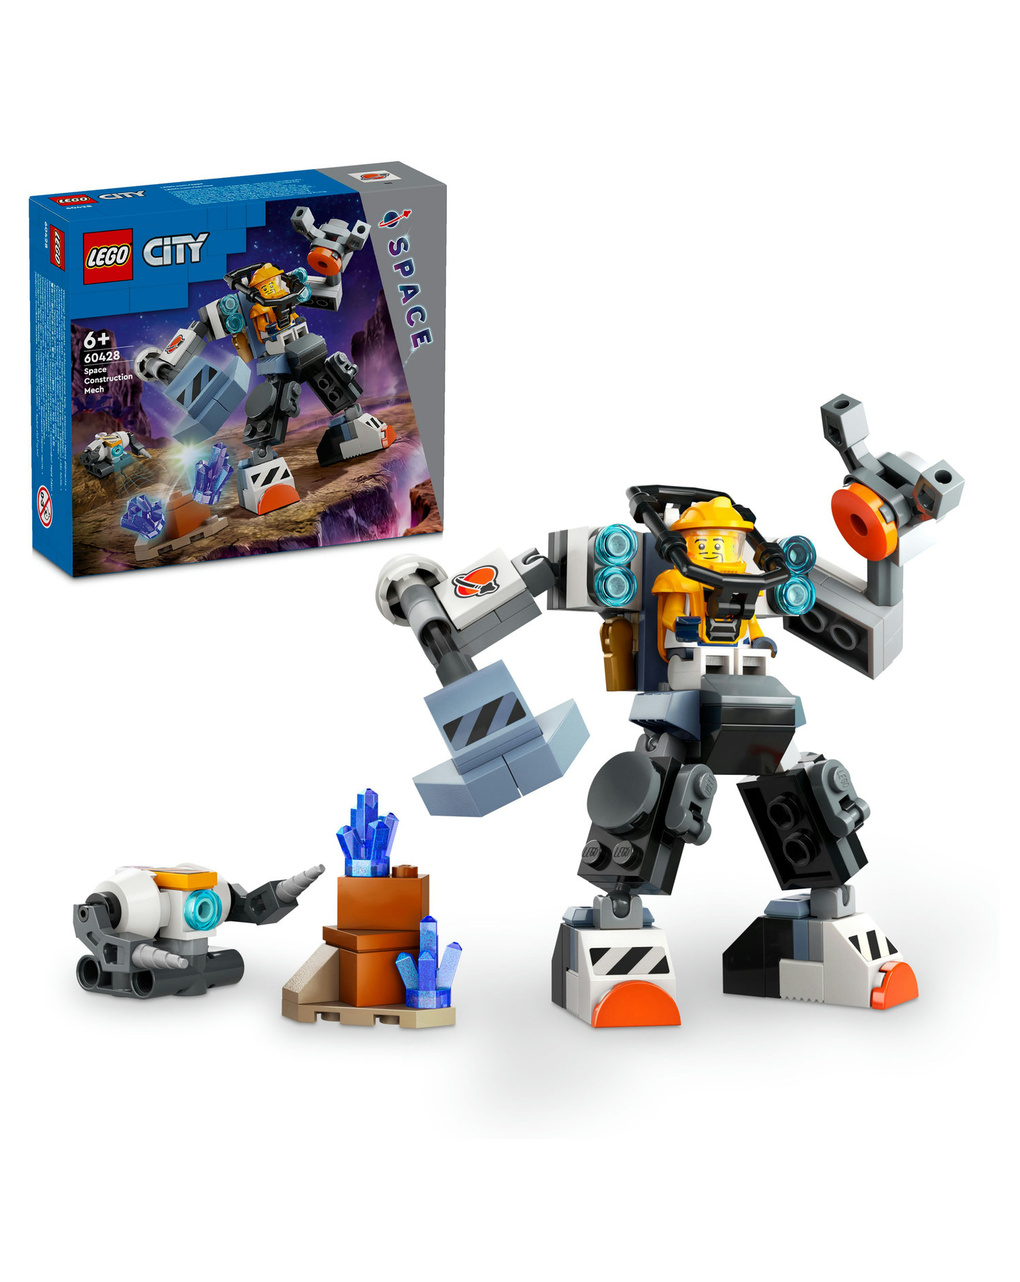 Space construction mech - 60428 - lego city - LEGO